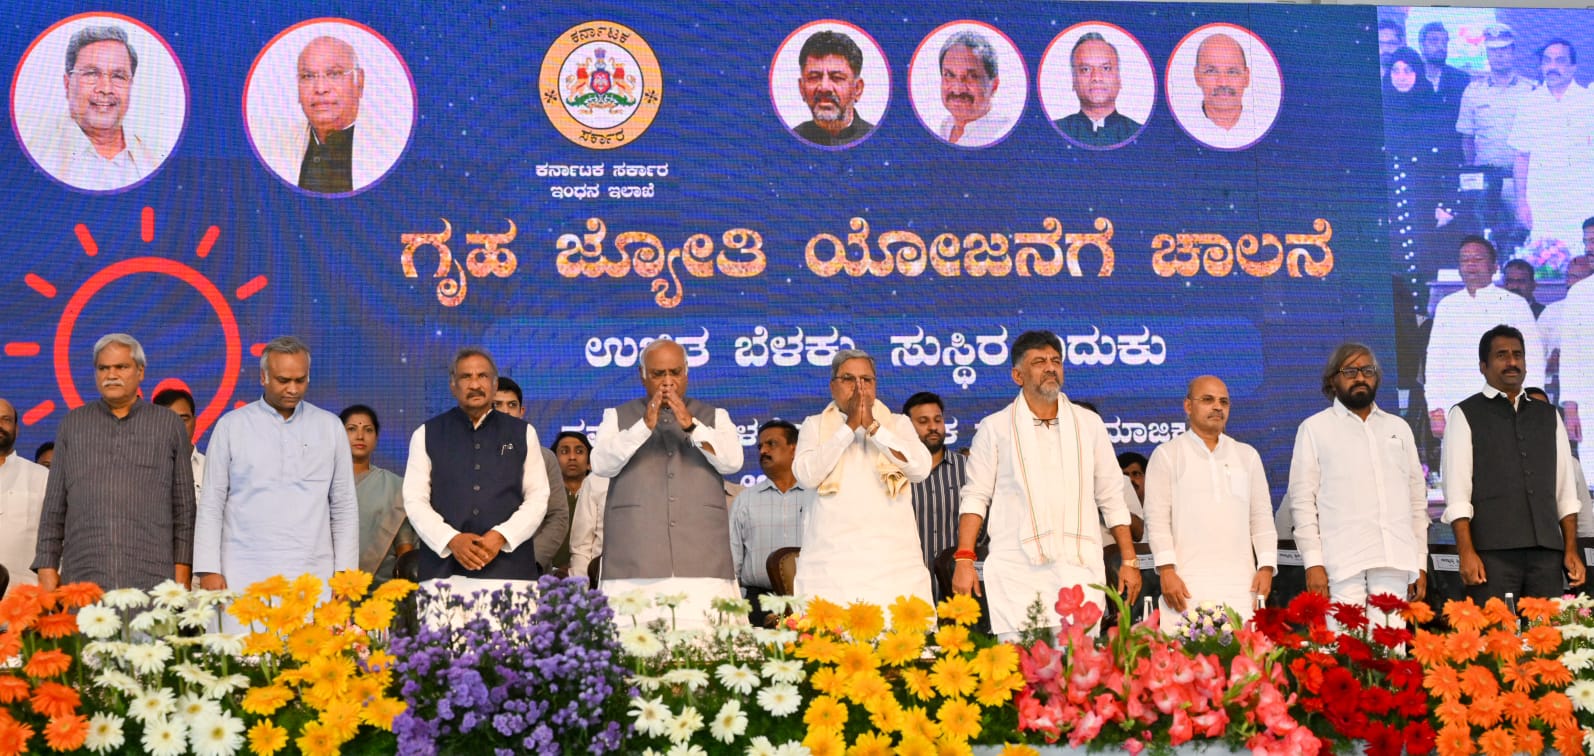 Karnataka government launches Gruha Jyothi scheme from Kalaburagi. (Supplied)